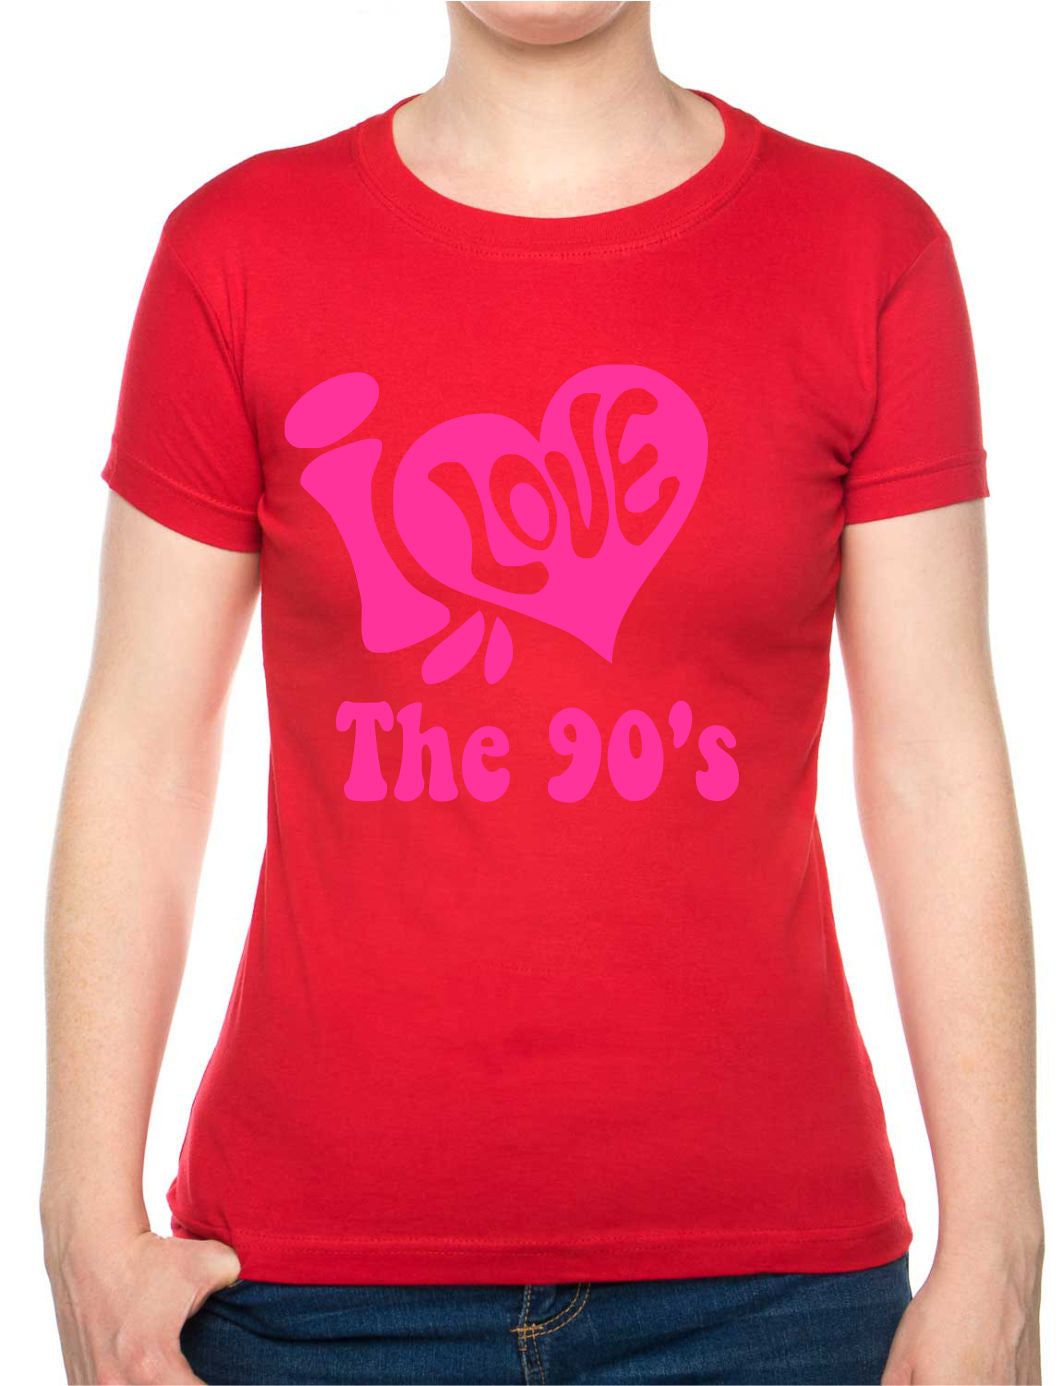 I Love the 90's Nineties Music Ladies T-Shirt